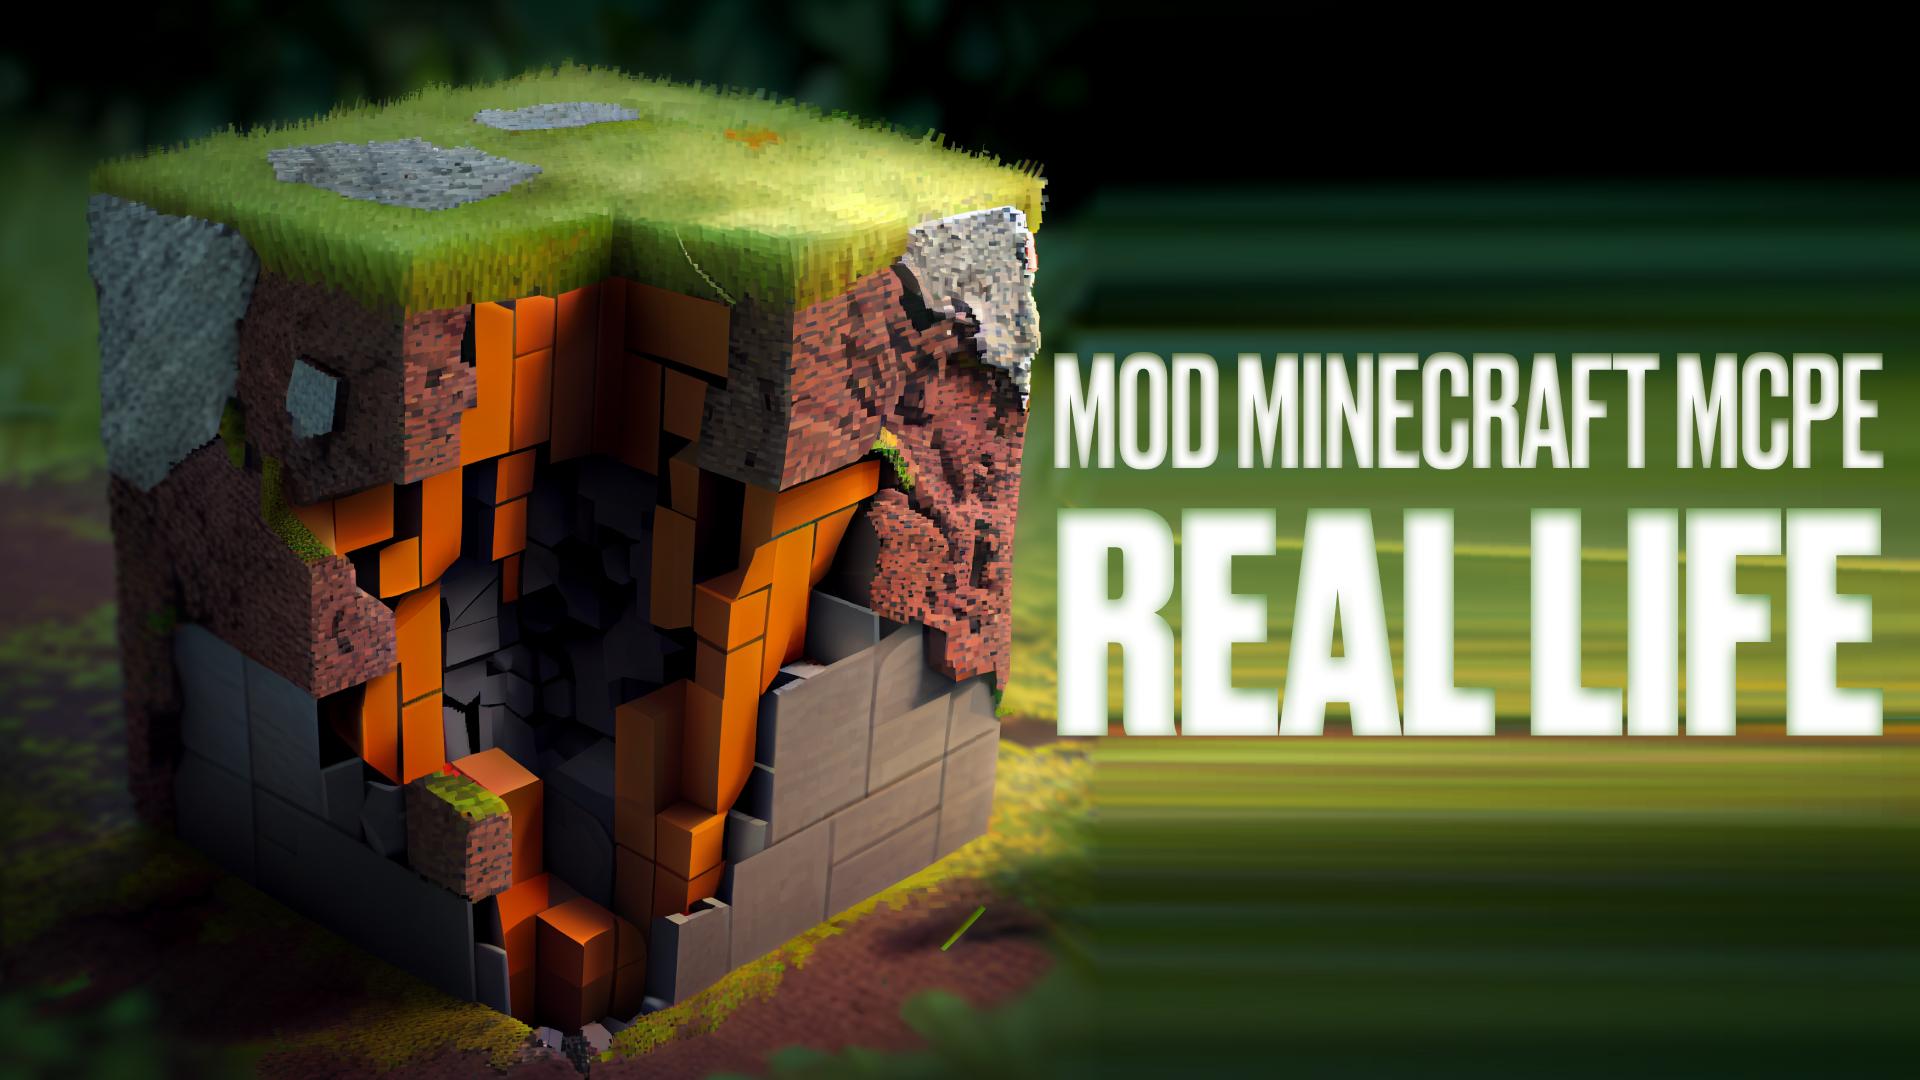 Real life minecraft